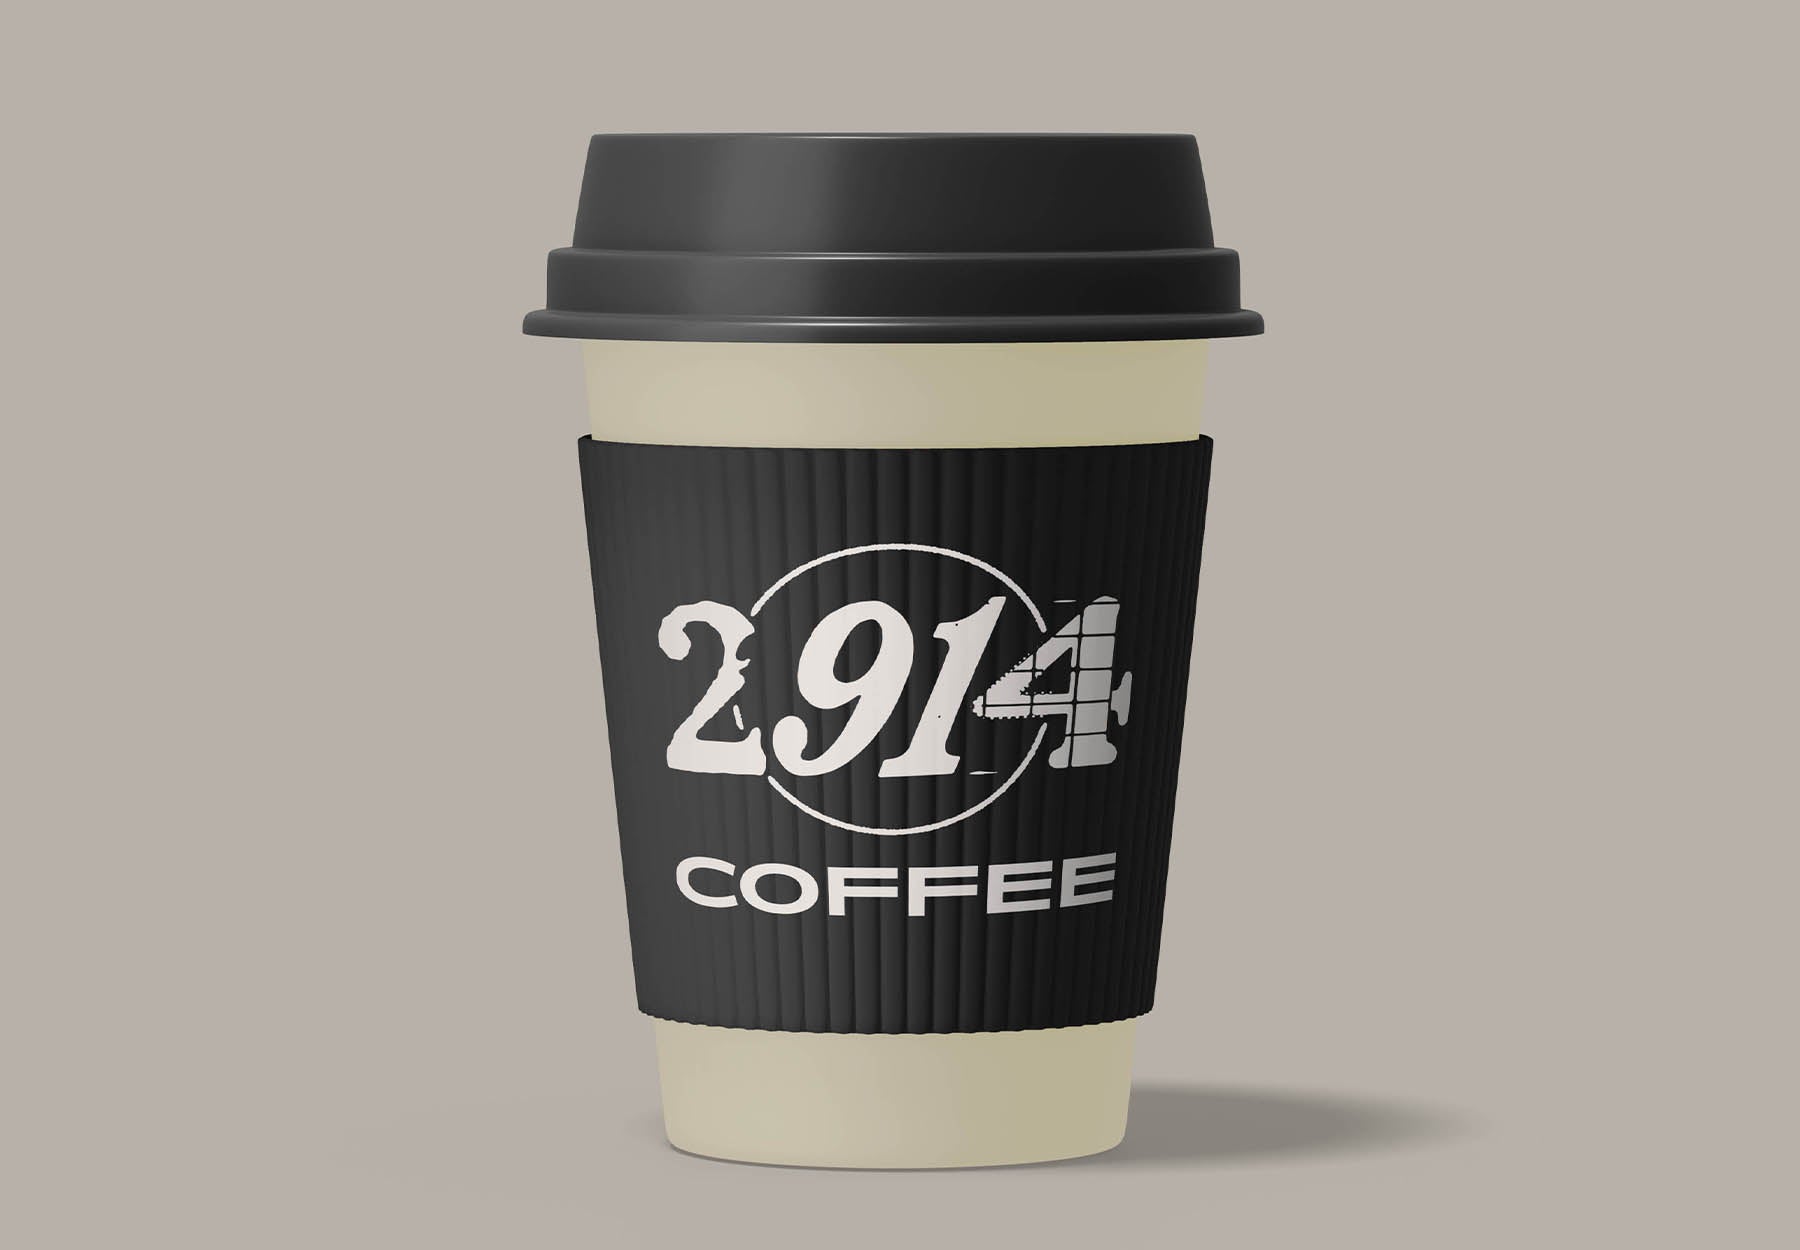 2914 Coffee Denver Colorado Coffee sleeve mock up